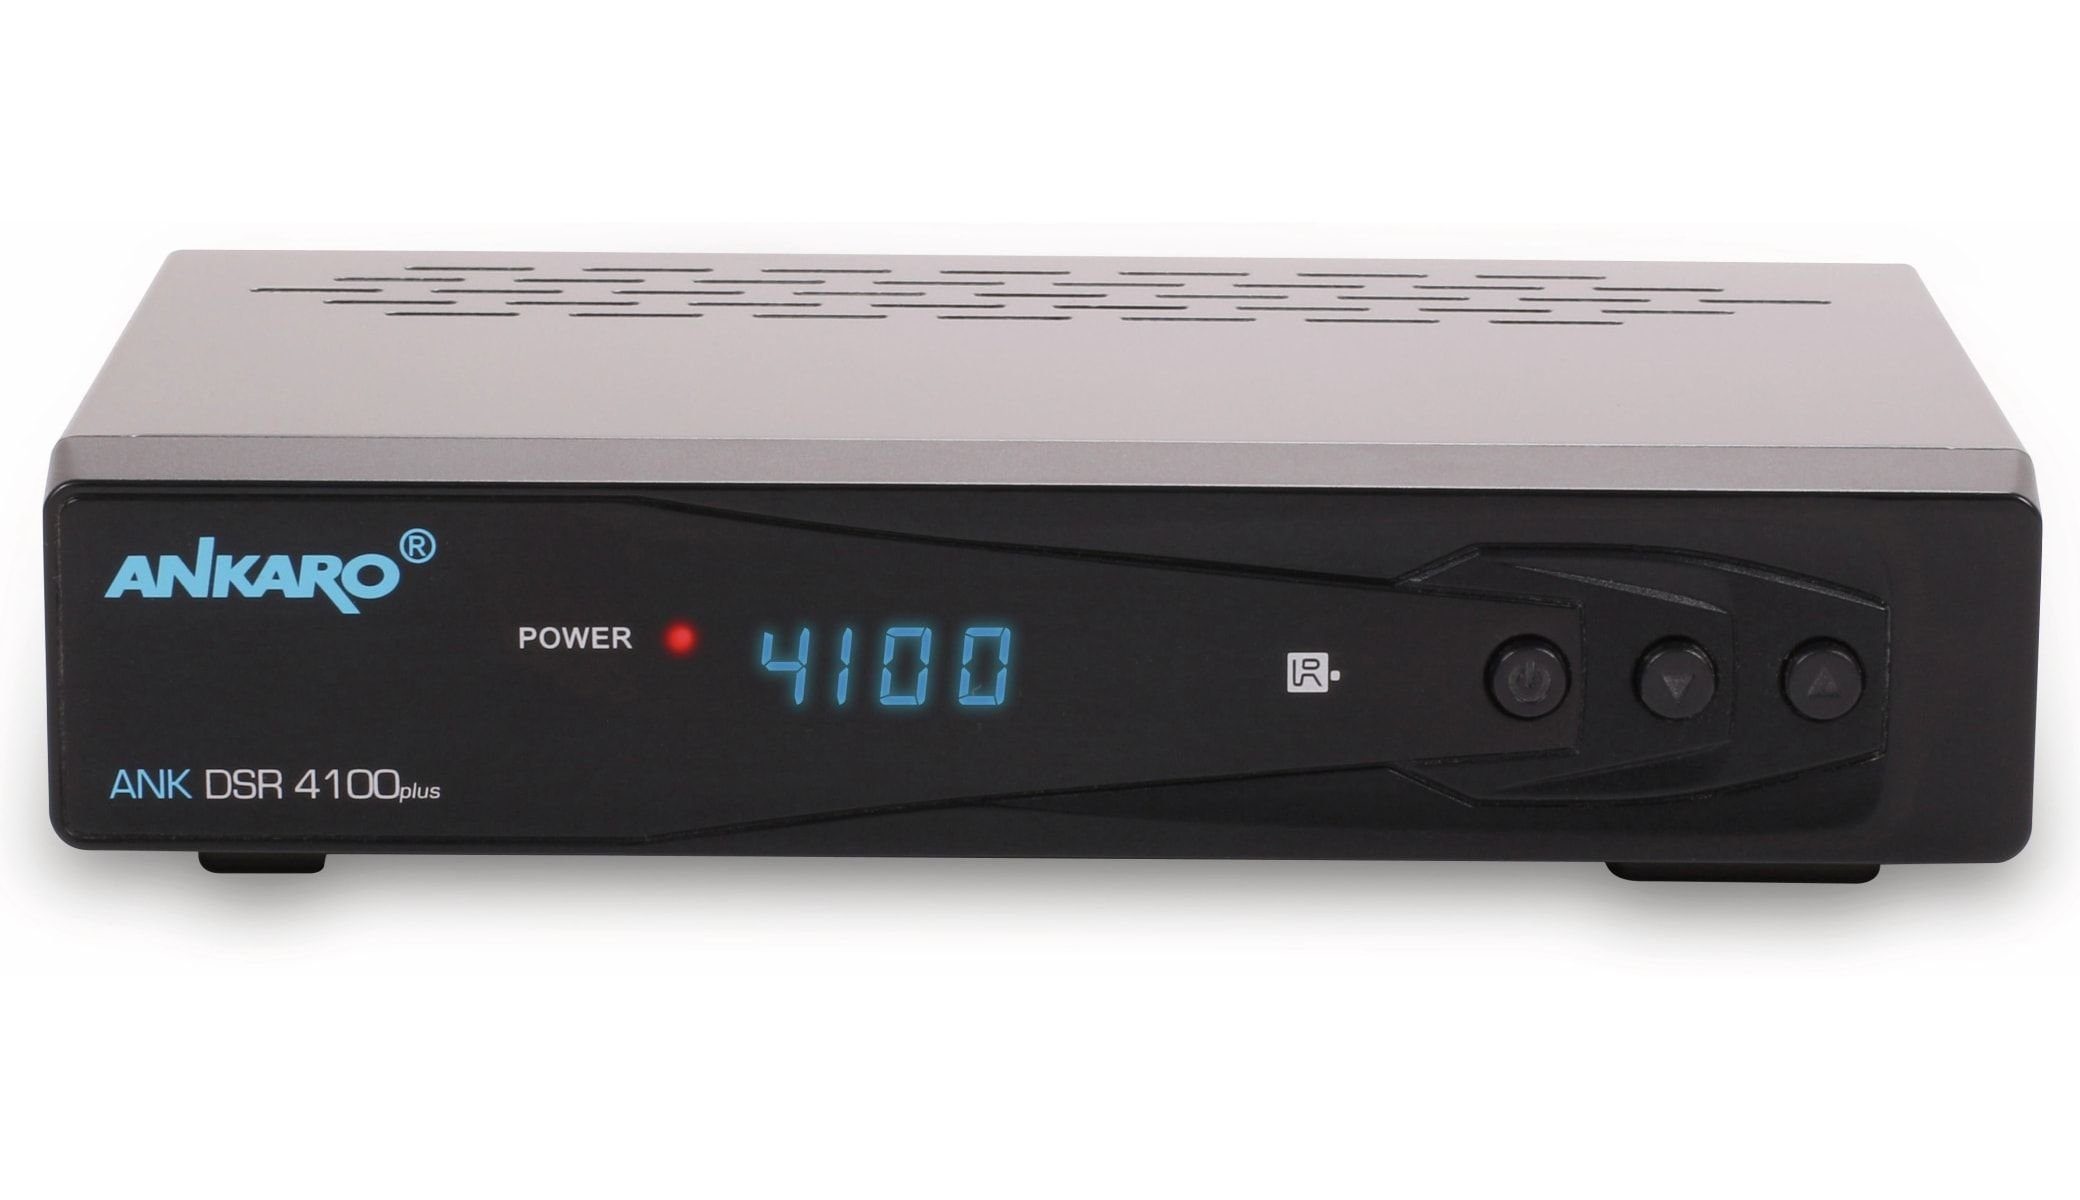 ANKARO Ankaro Satellitenreceiver 4100plus, DVB-S DSR HDTV-Receiver PVR